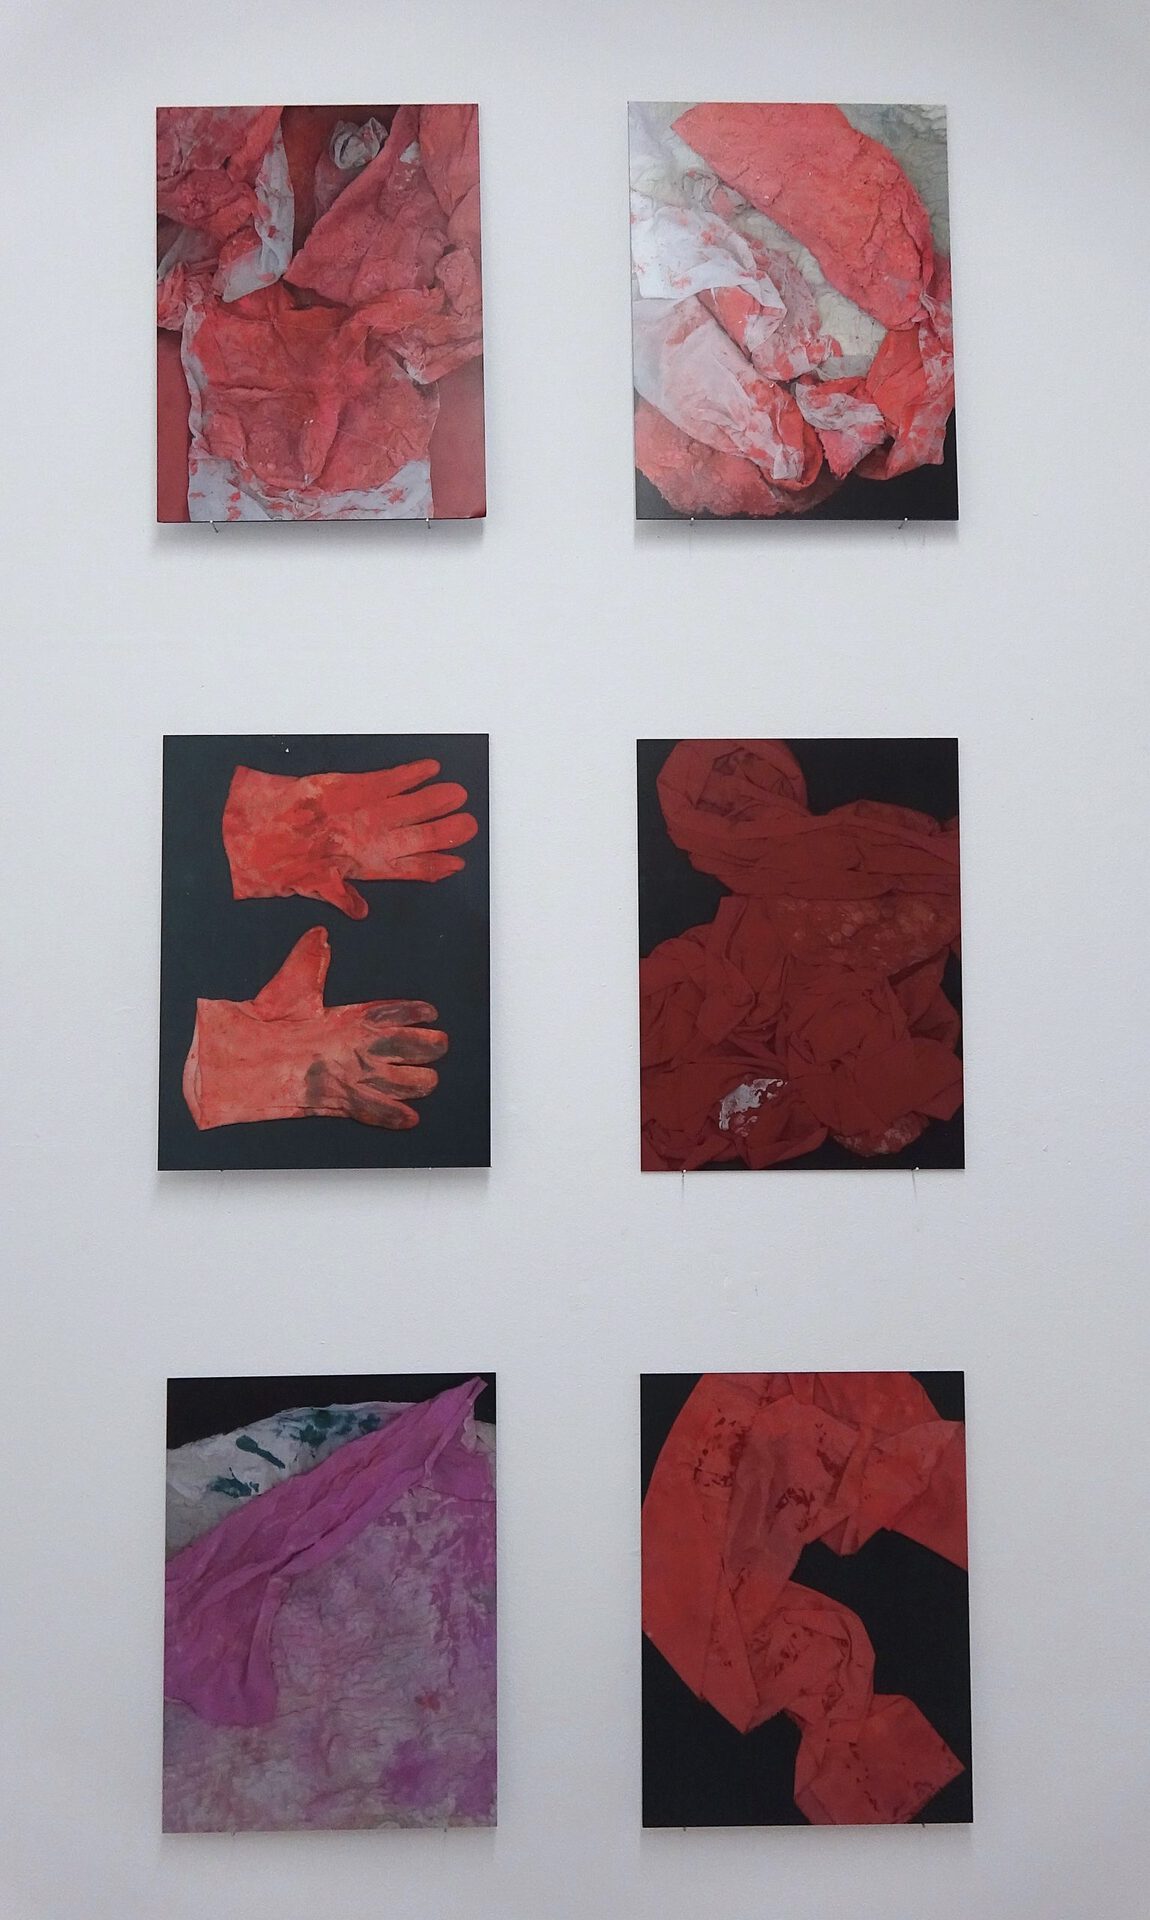 Monika Dorniak, The Human Anatomy Is Adorning Itself, 2009, textile scan print on alu dibond, 120 x 60 x 4 cm